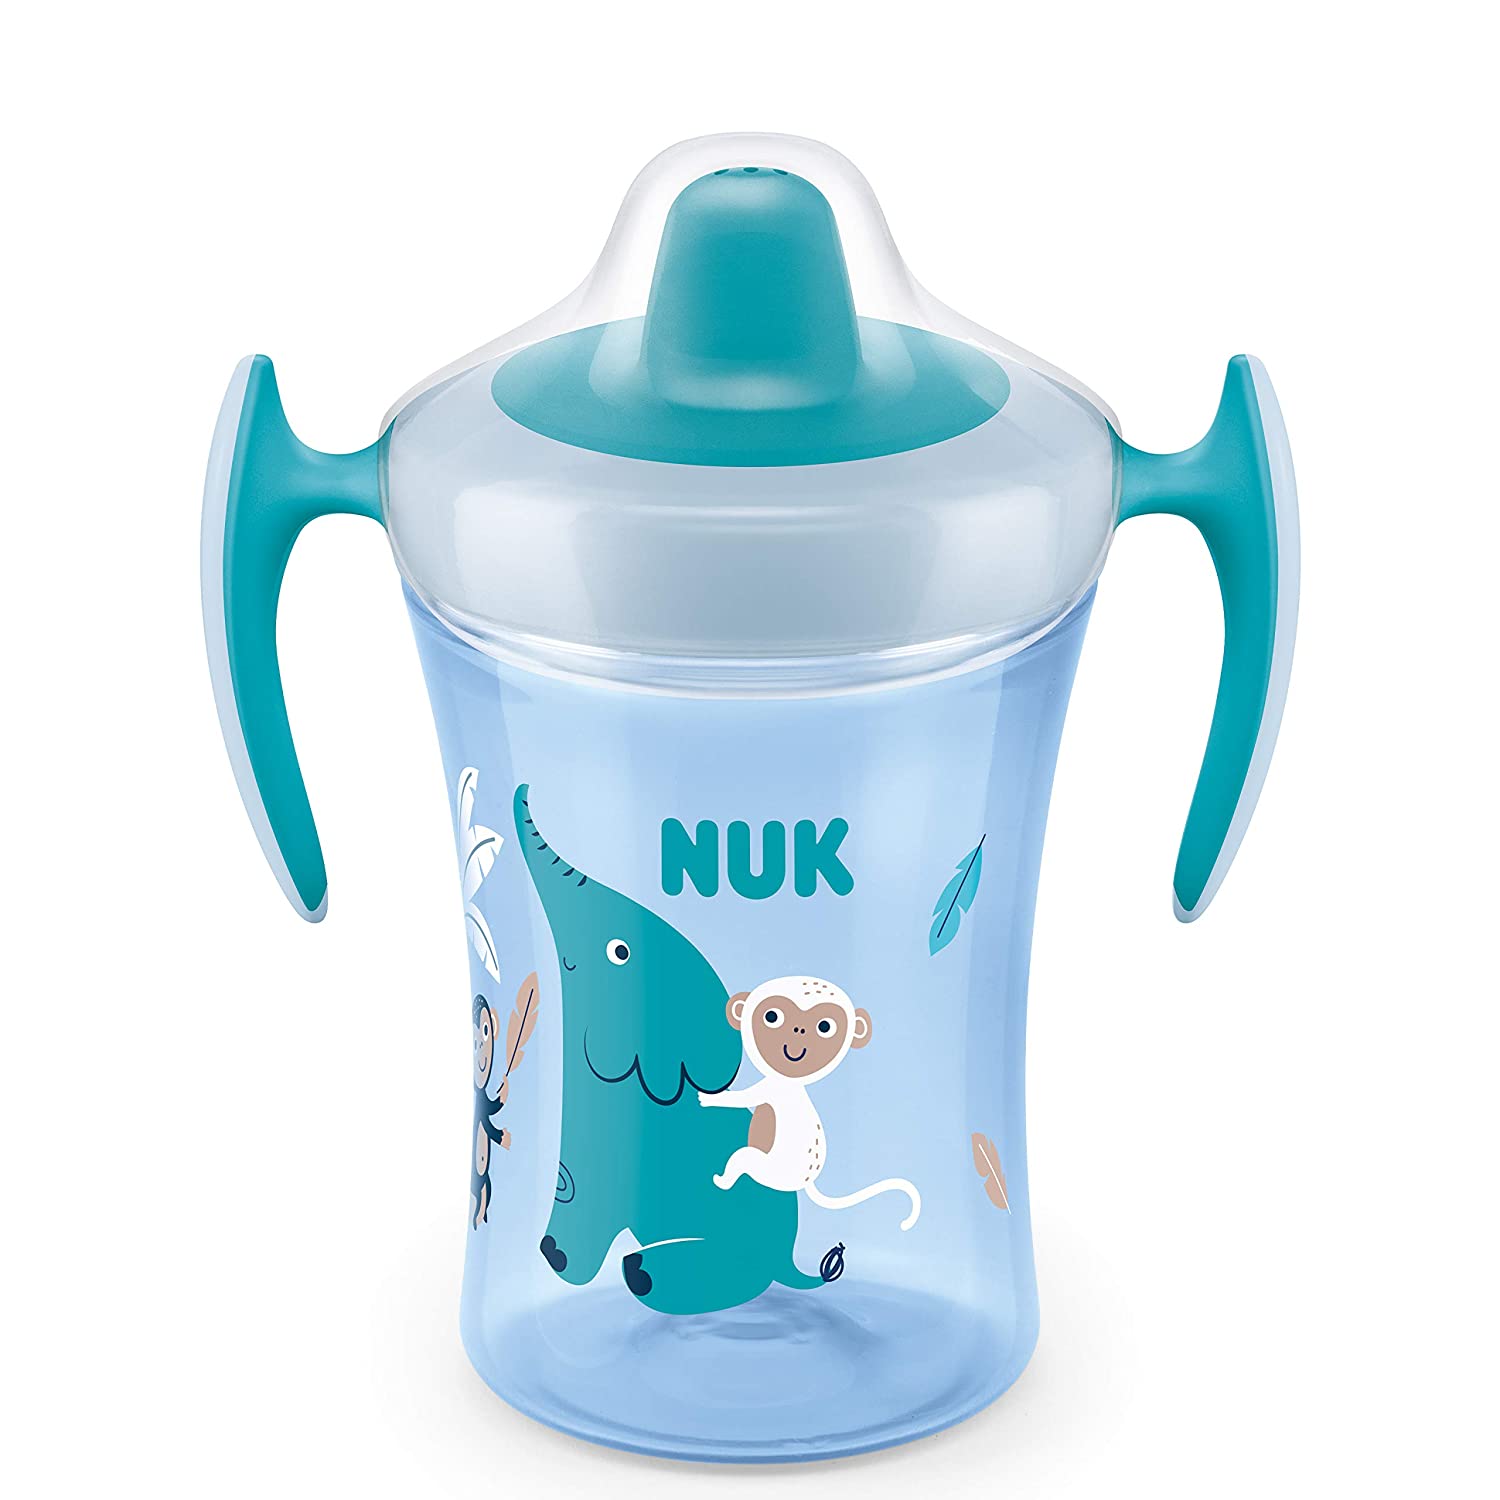 Nuk Training Cup, Soft Spout, Leak-Proof - For 6+ Months - Bpa-Free - 230 M